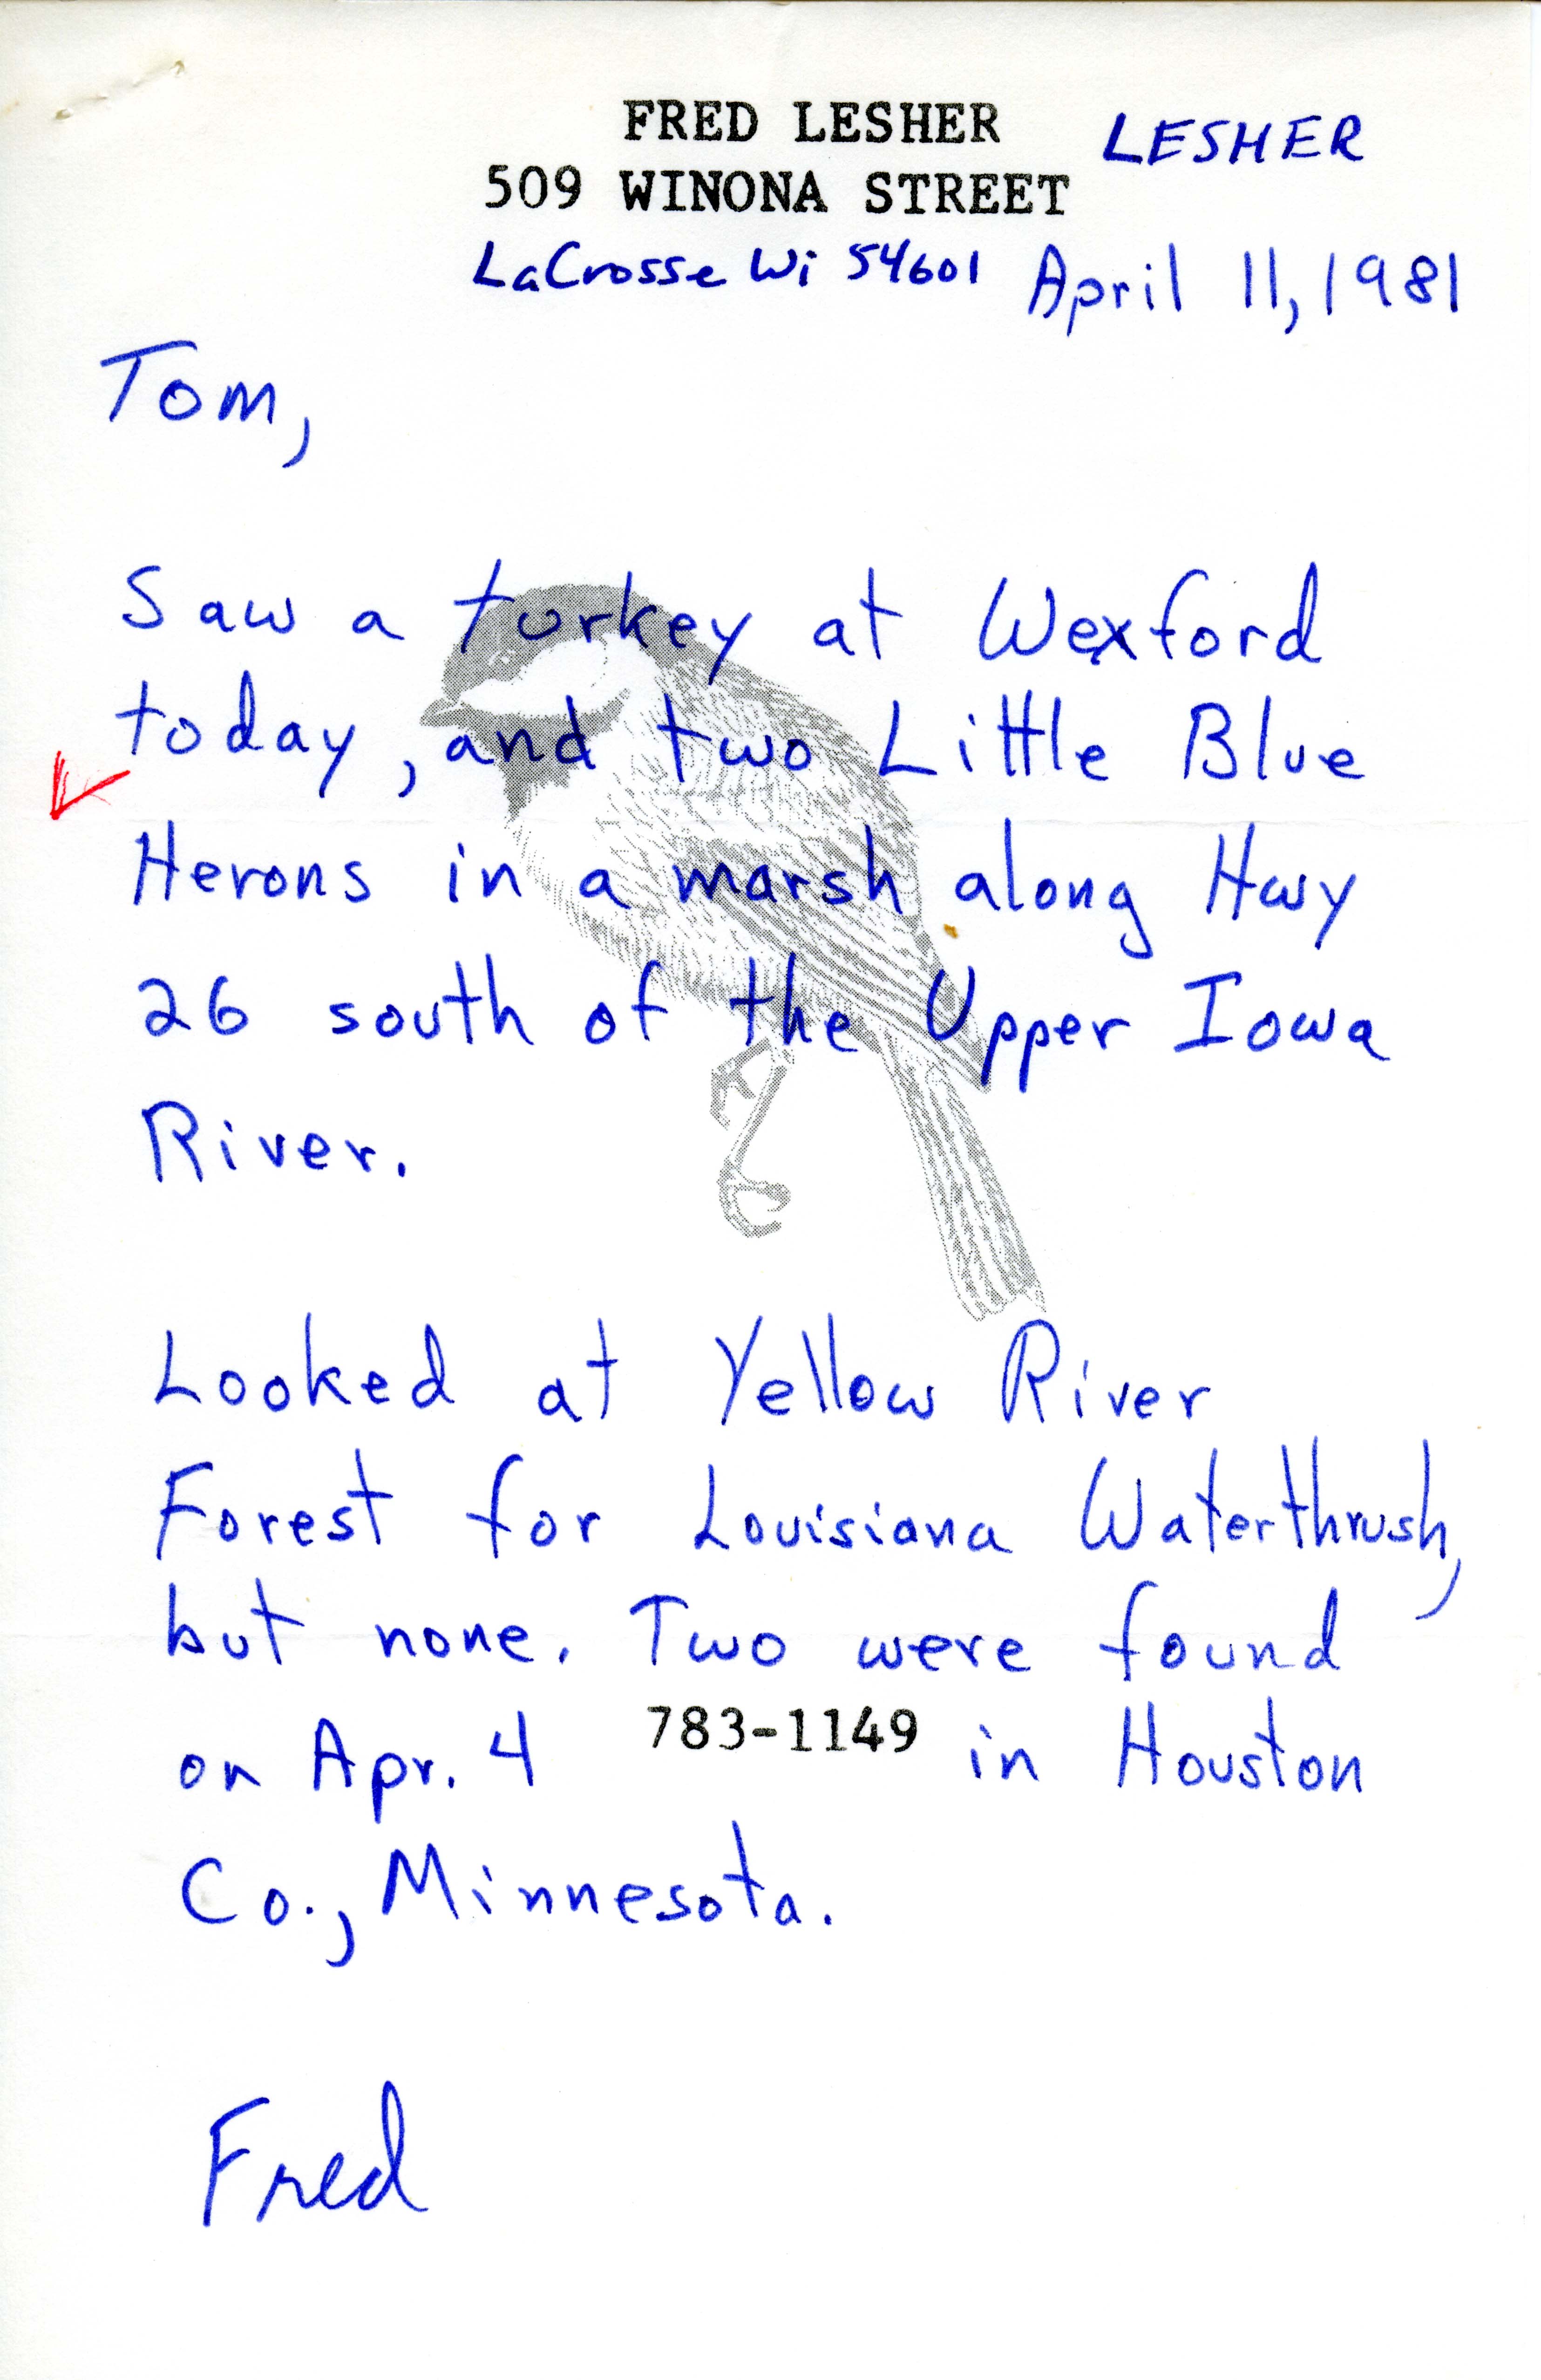 Fred Lesher letter to Thomas Kent regarding Little Blue Heron sighting, April 11, 1981